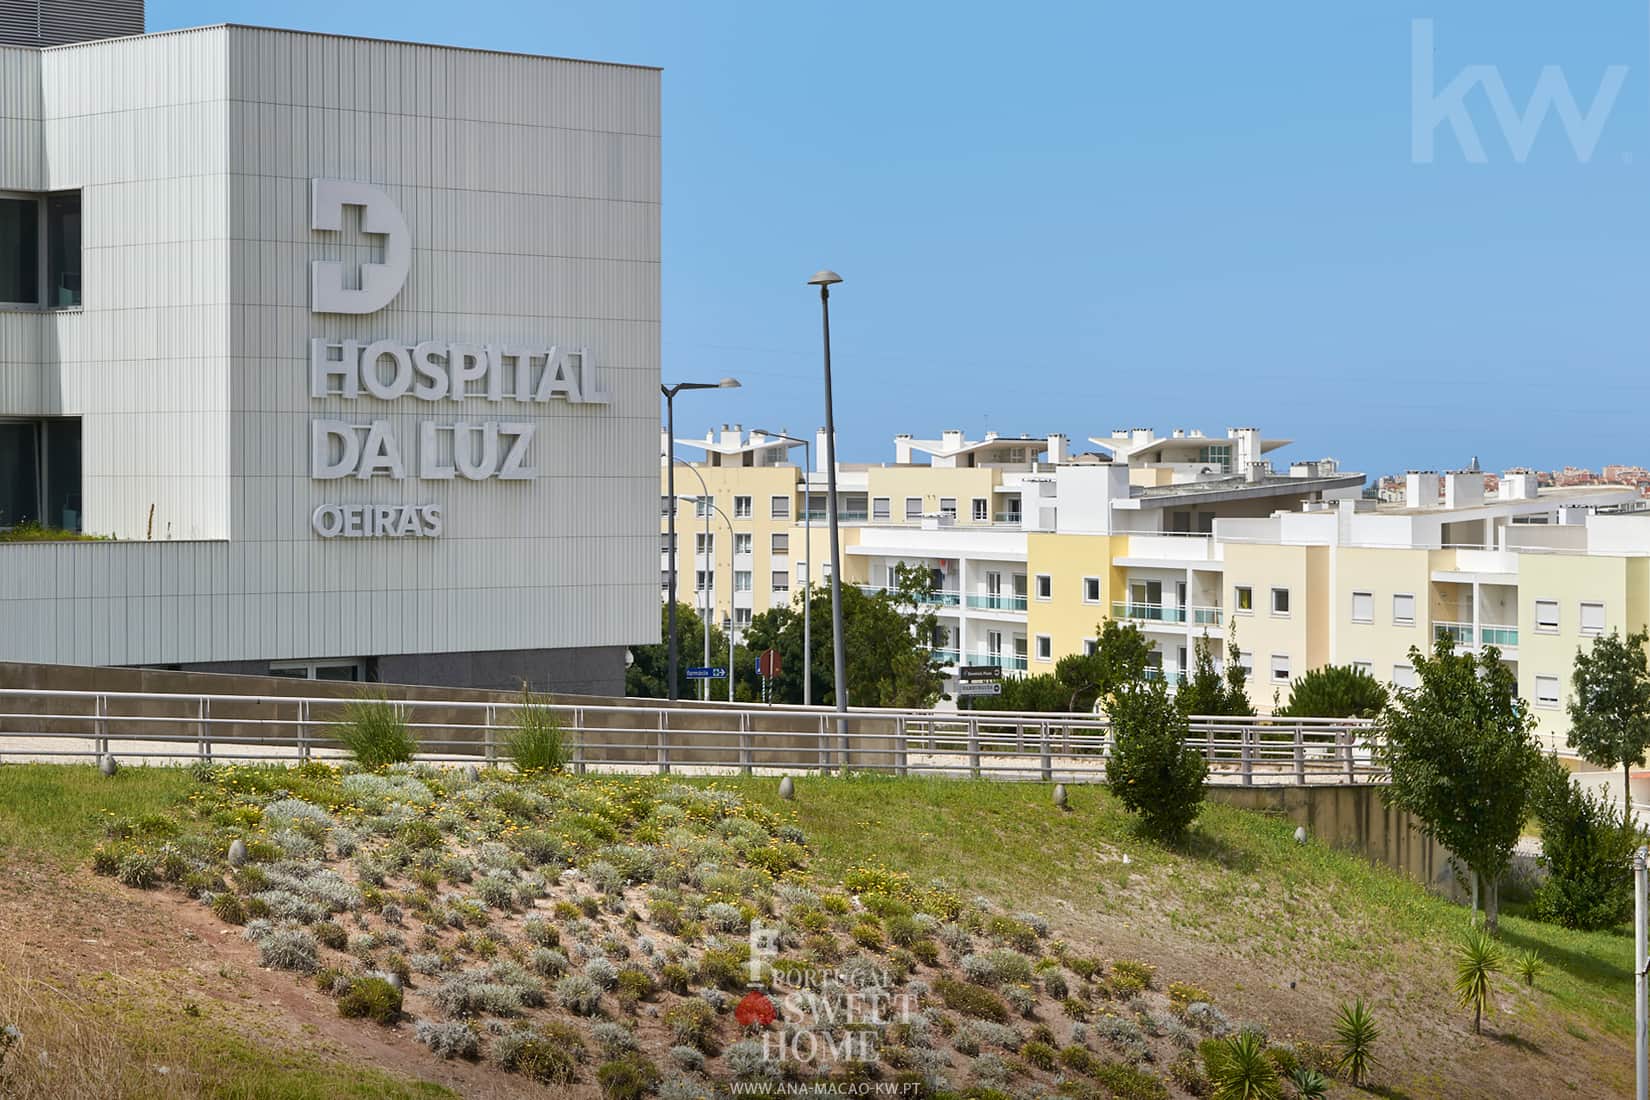 Hôpital da Luz de Oeiras, en face de la propriété